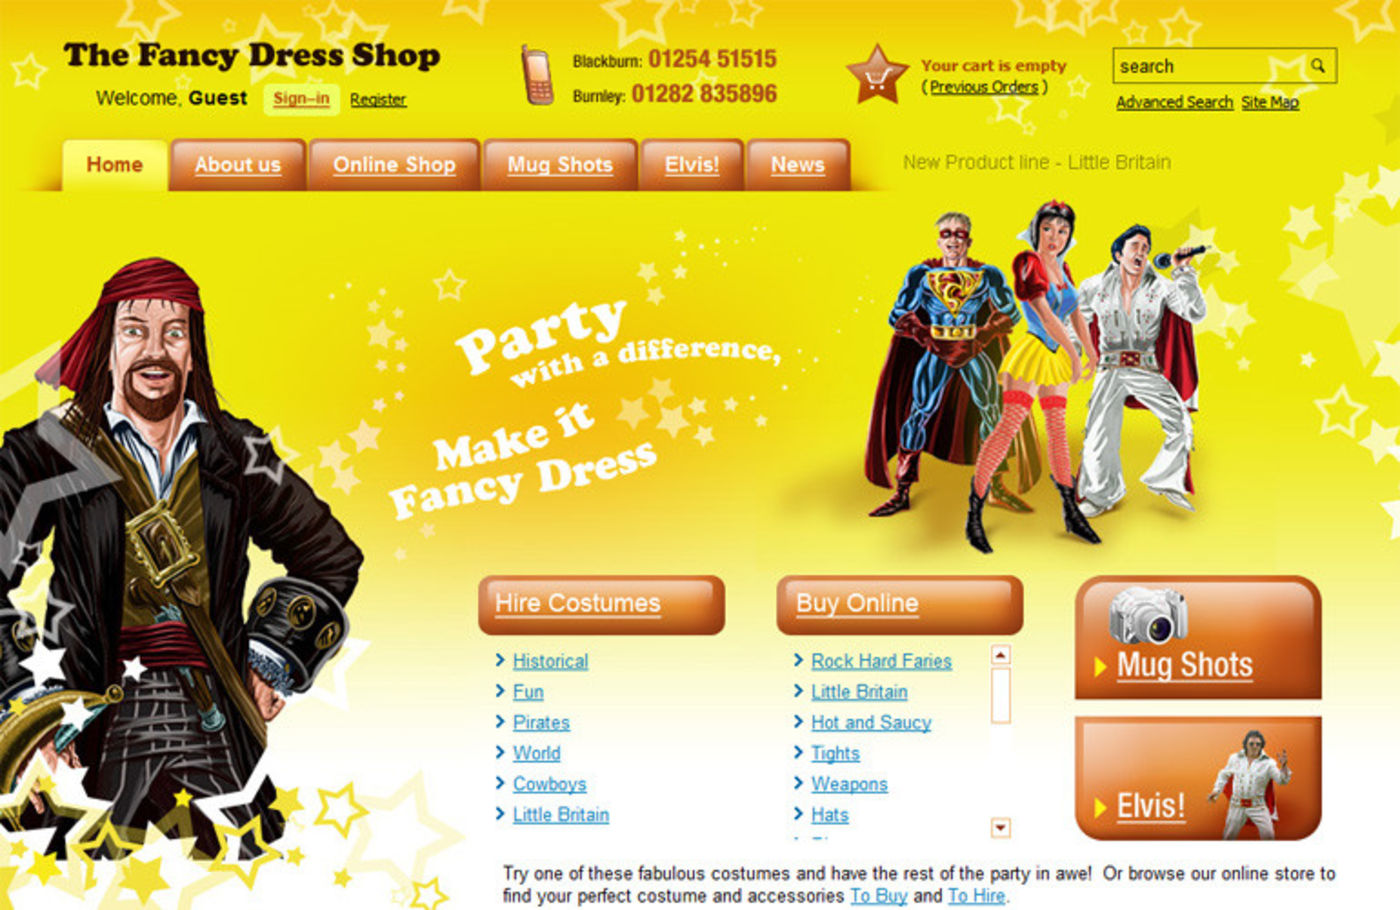 The Fancy Dress Shop Homepage header